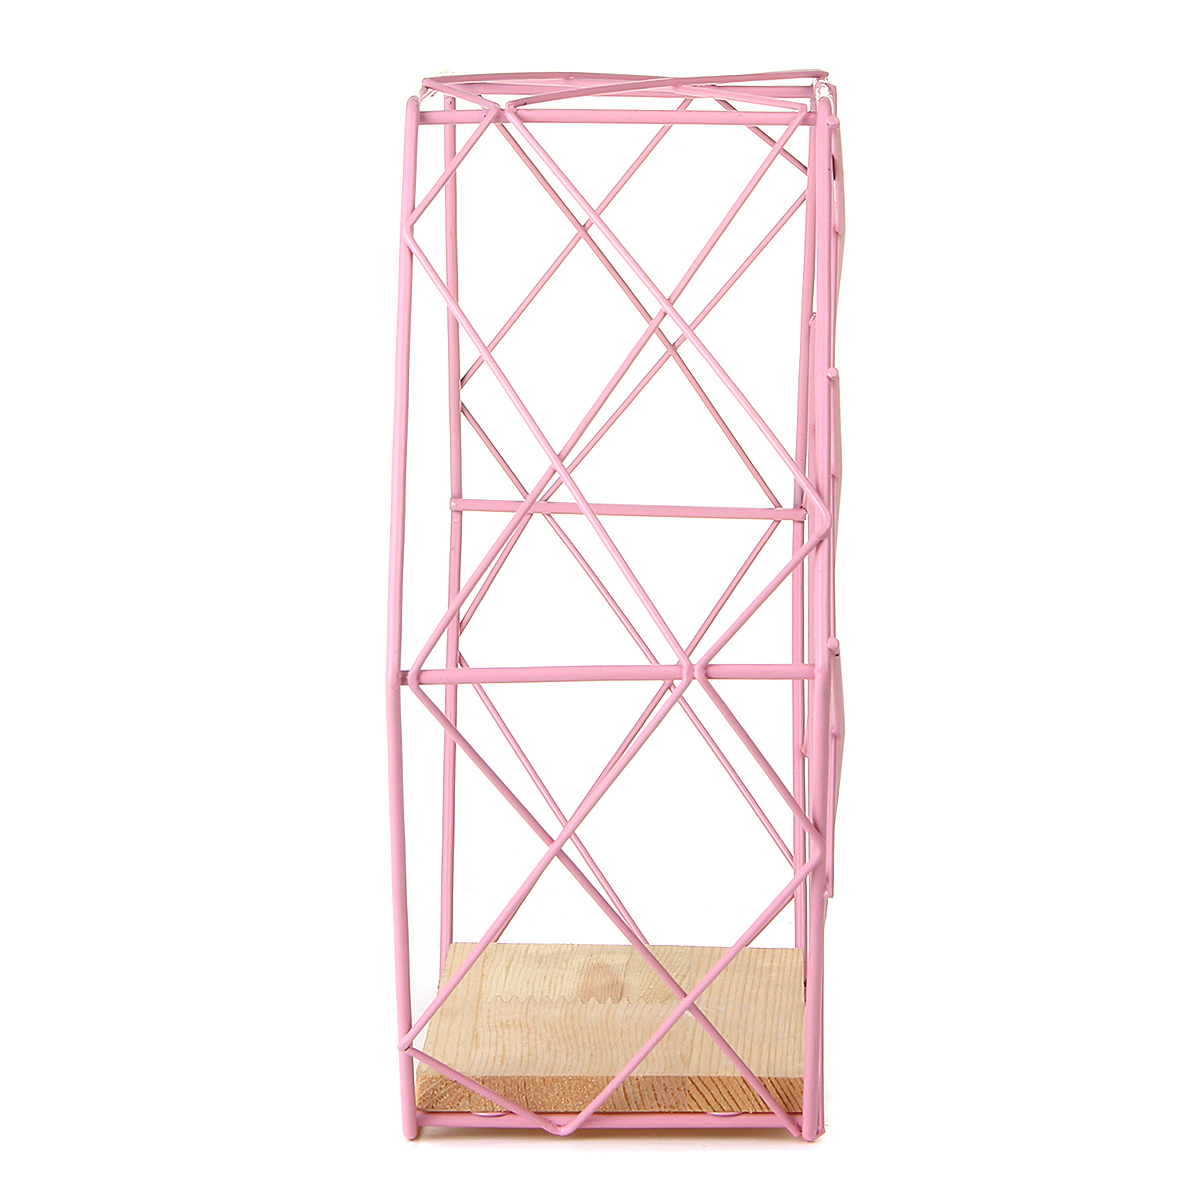 DIY-Wall-mounted-Display-Shelf-Rack-Floating-Storage-Iron-Wood-Organizer-1661425-8